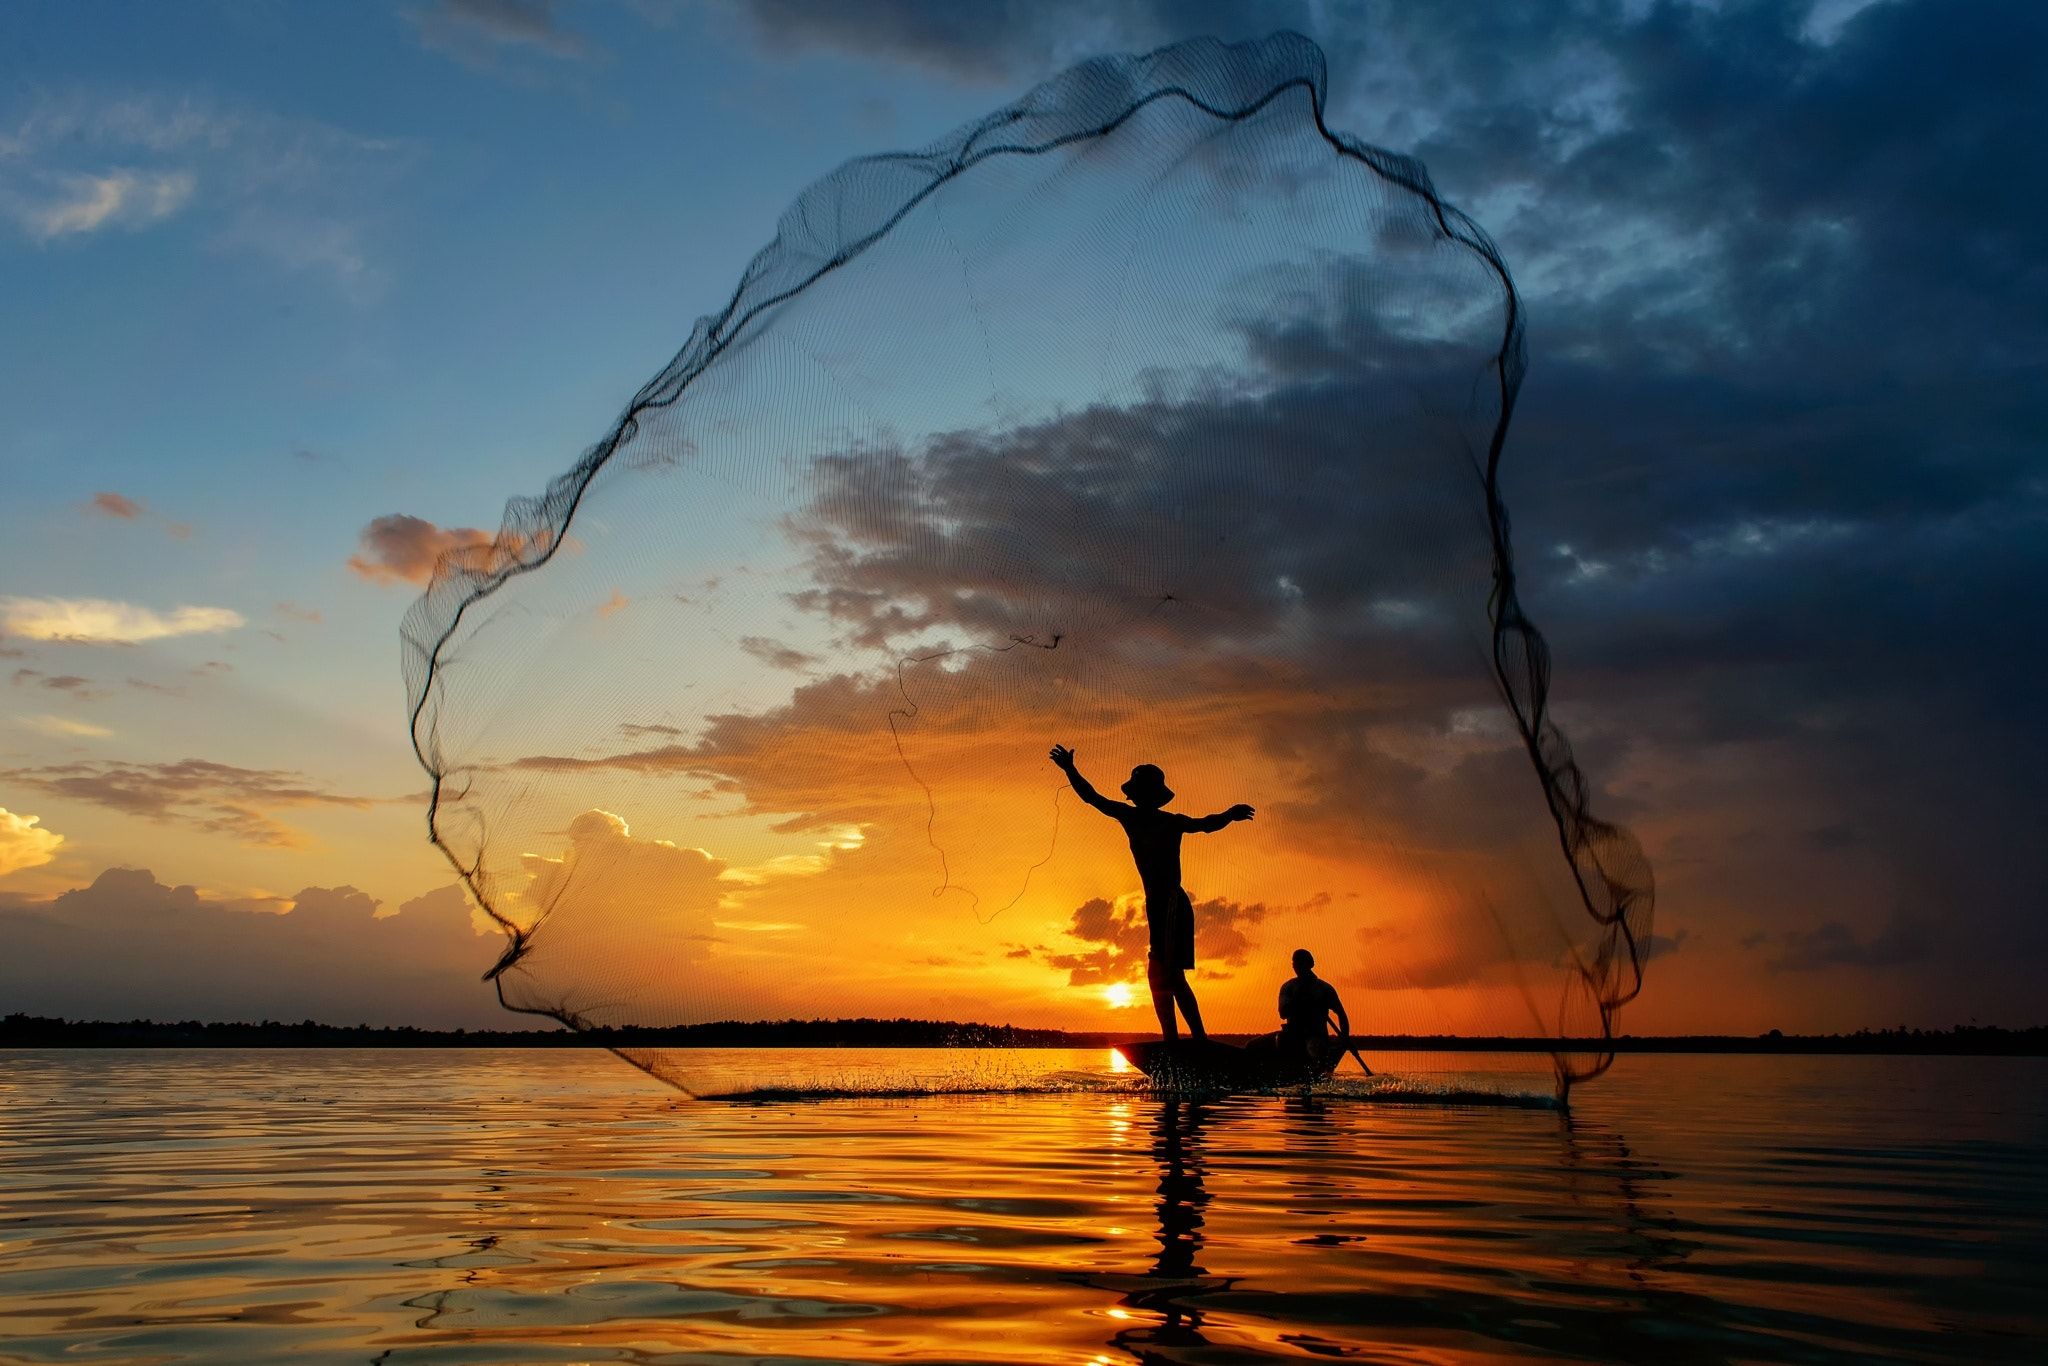 Silluate fisherman nets,Thailand - Silluate fisherman trow the nets ...